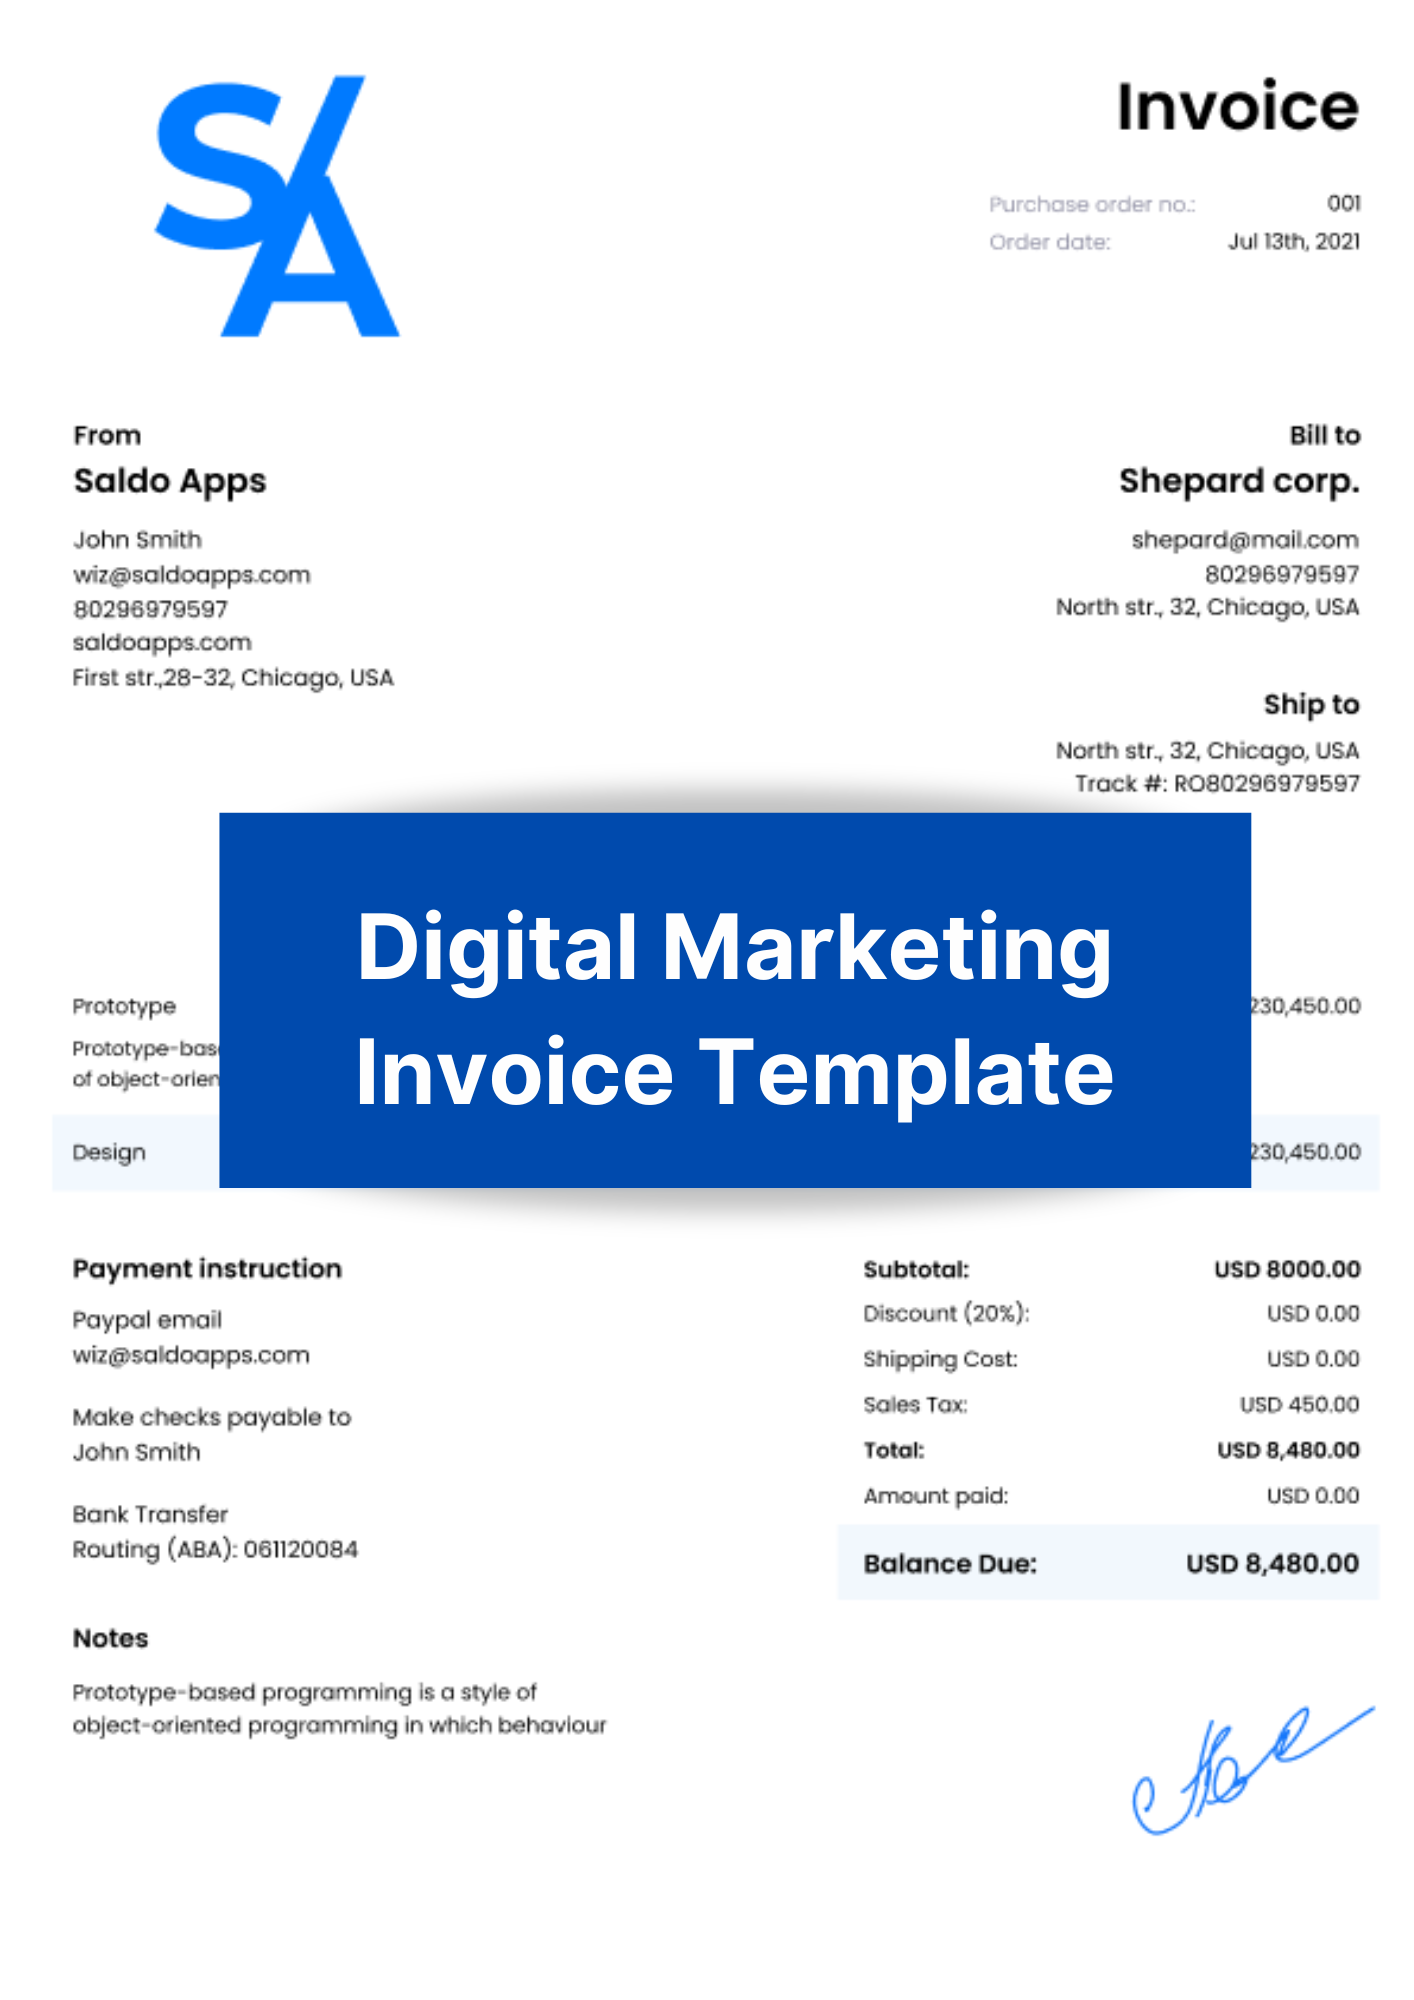 Digital Marketing Invoice Template